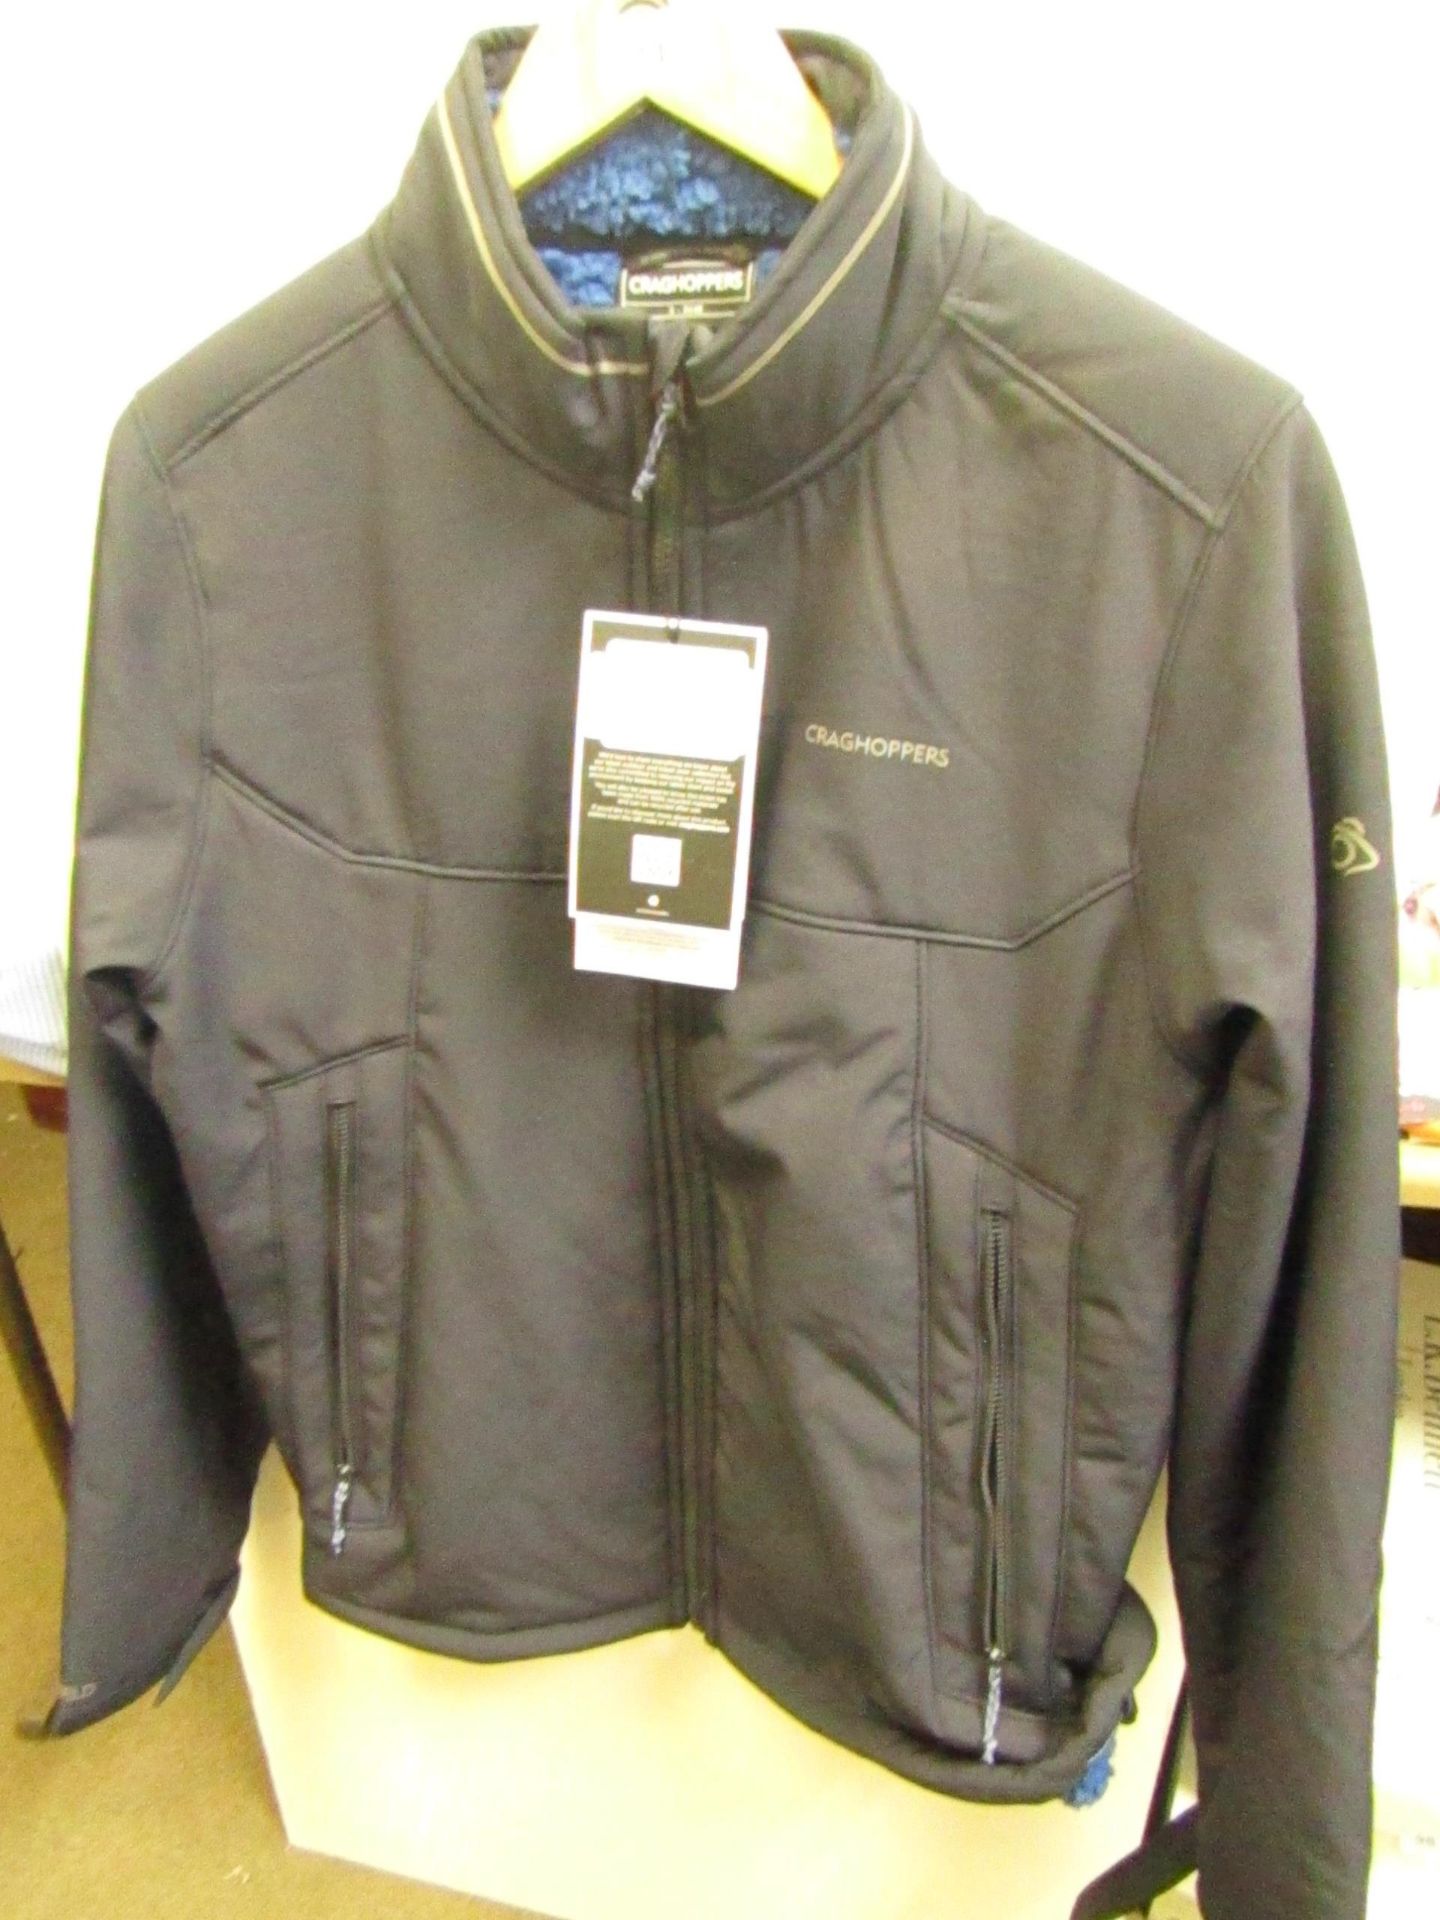 Craghopper Nervaweather proof Jacket, new size S, RRP £85